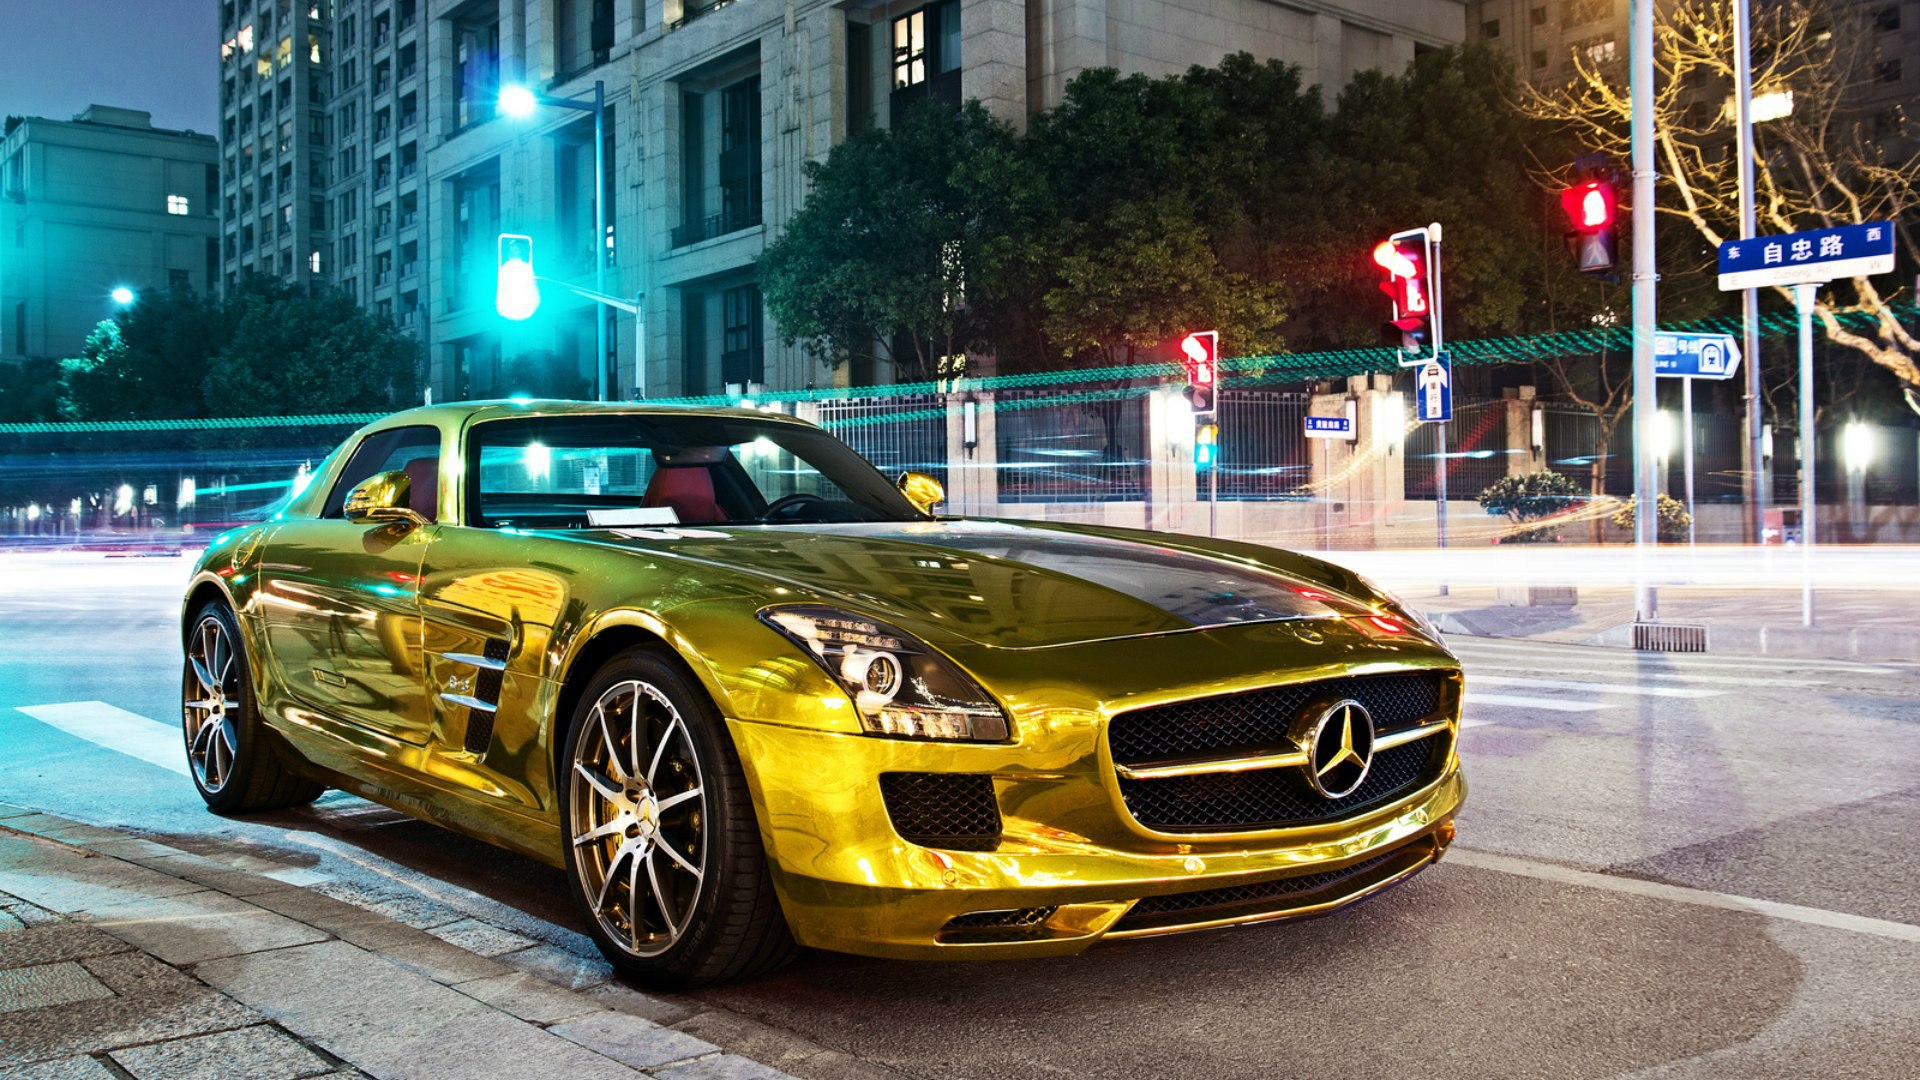 Gold Mercedes Benz Sls Amg Wallpaper And Image